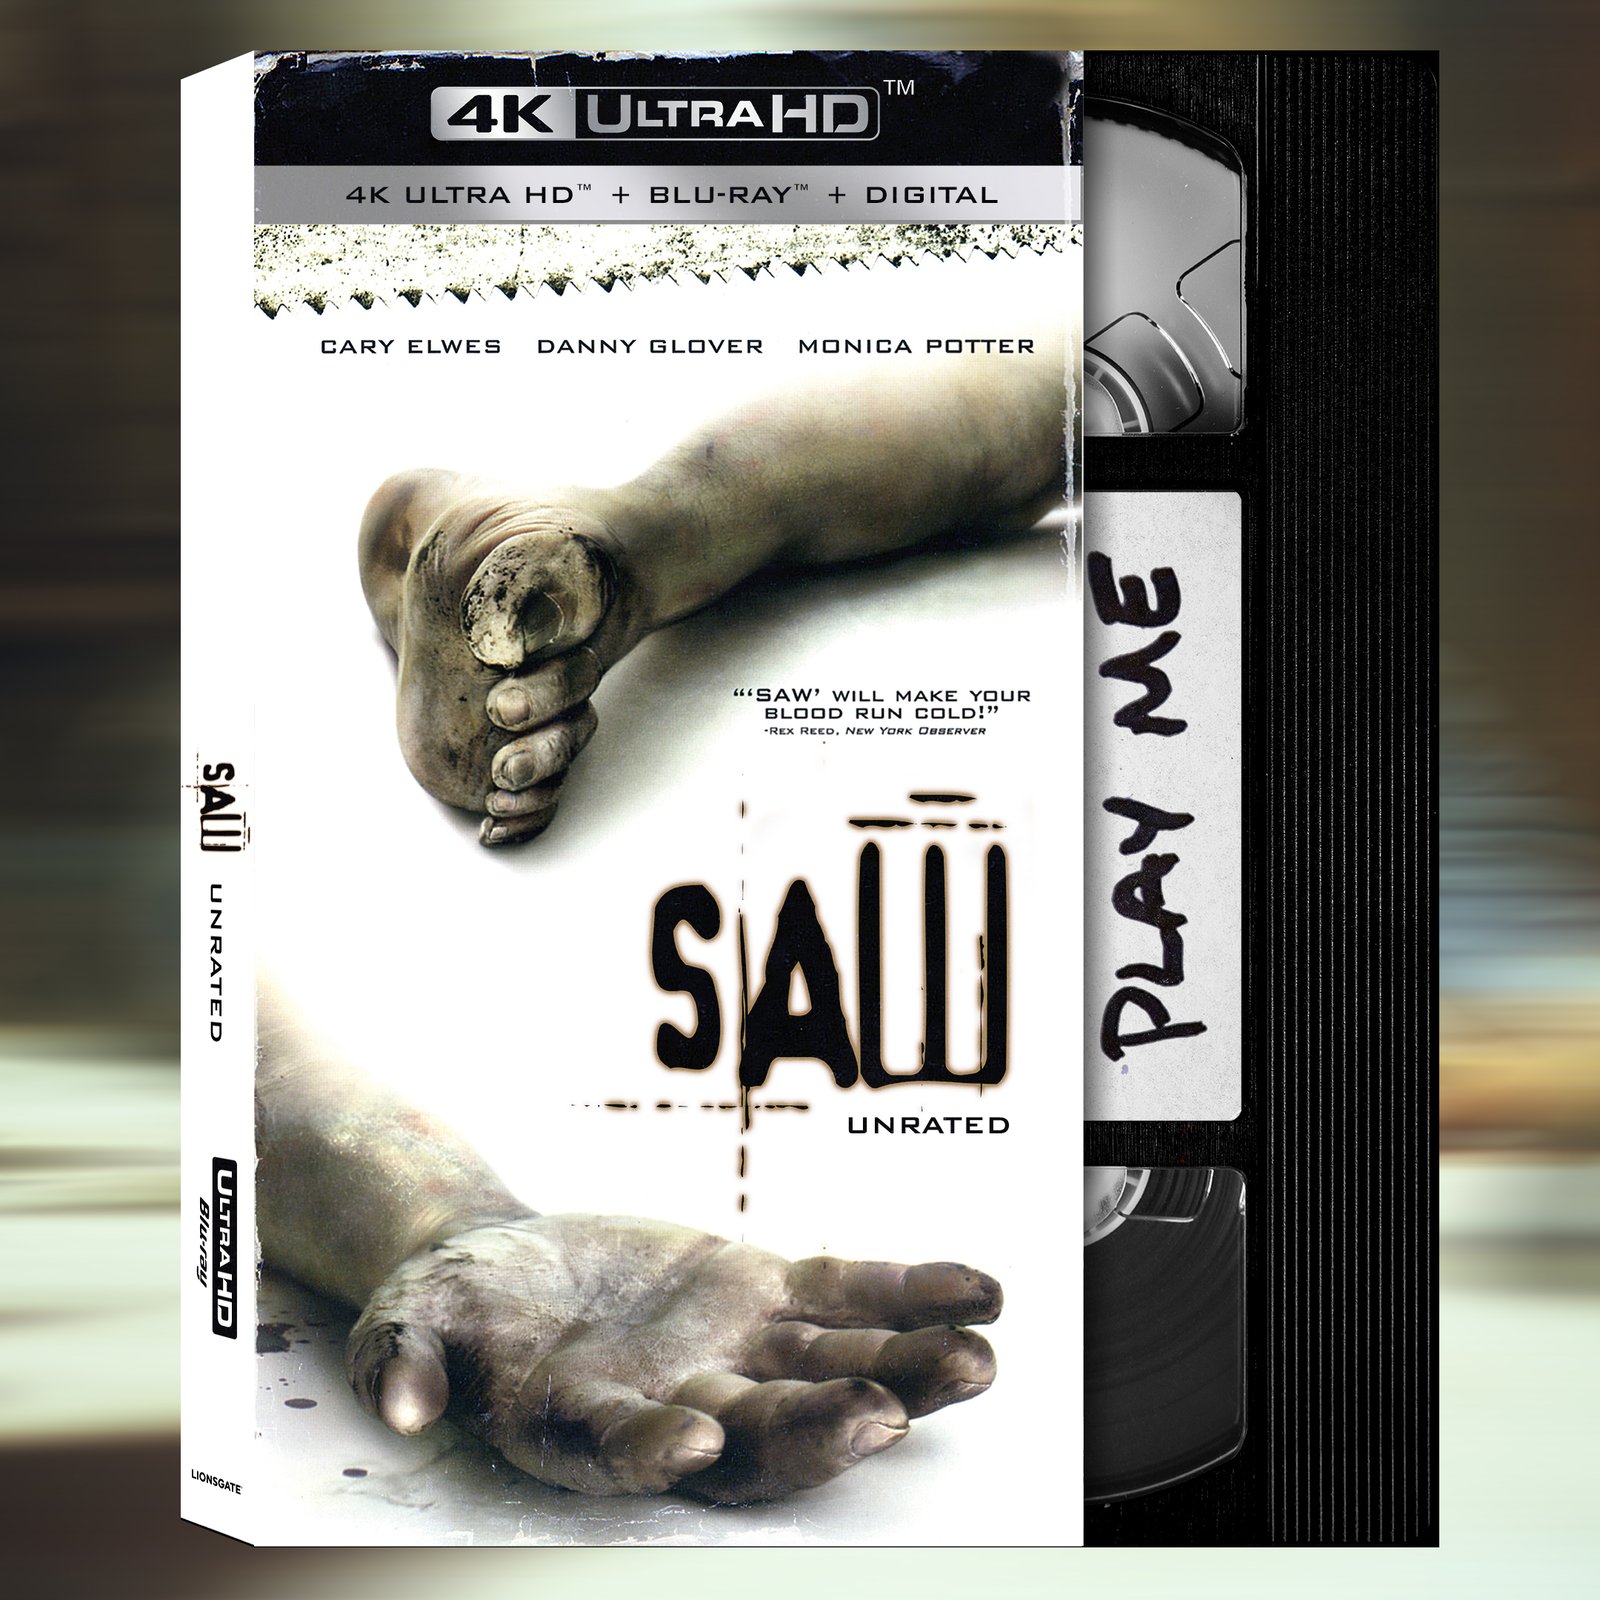 Retro VHS Slipcover Series #3: SAW (2004)